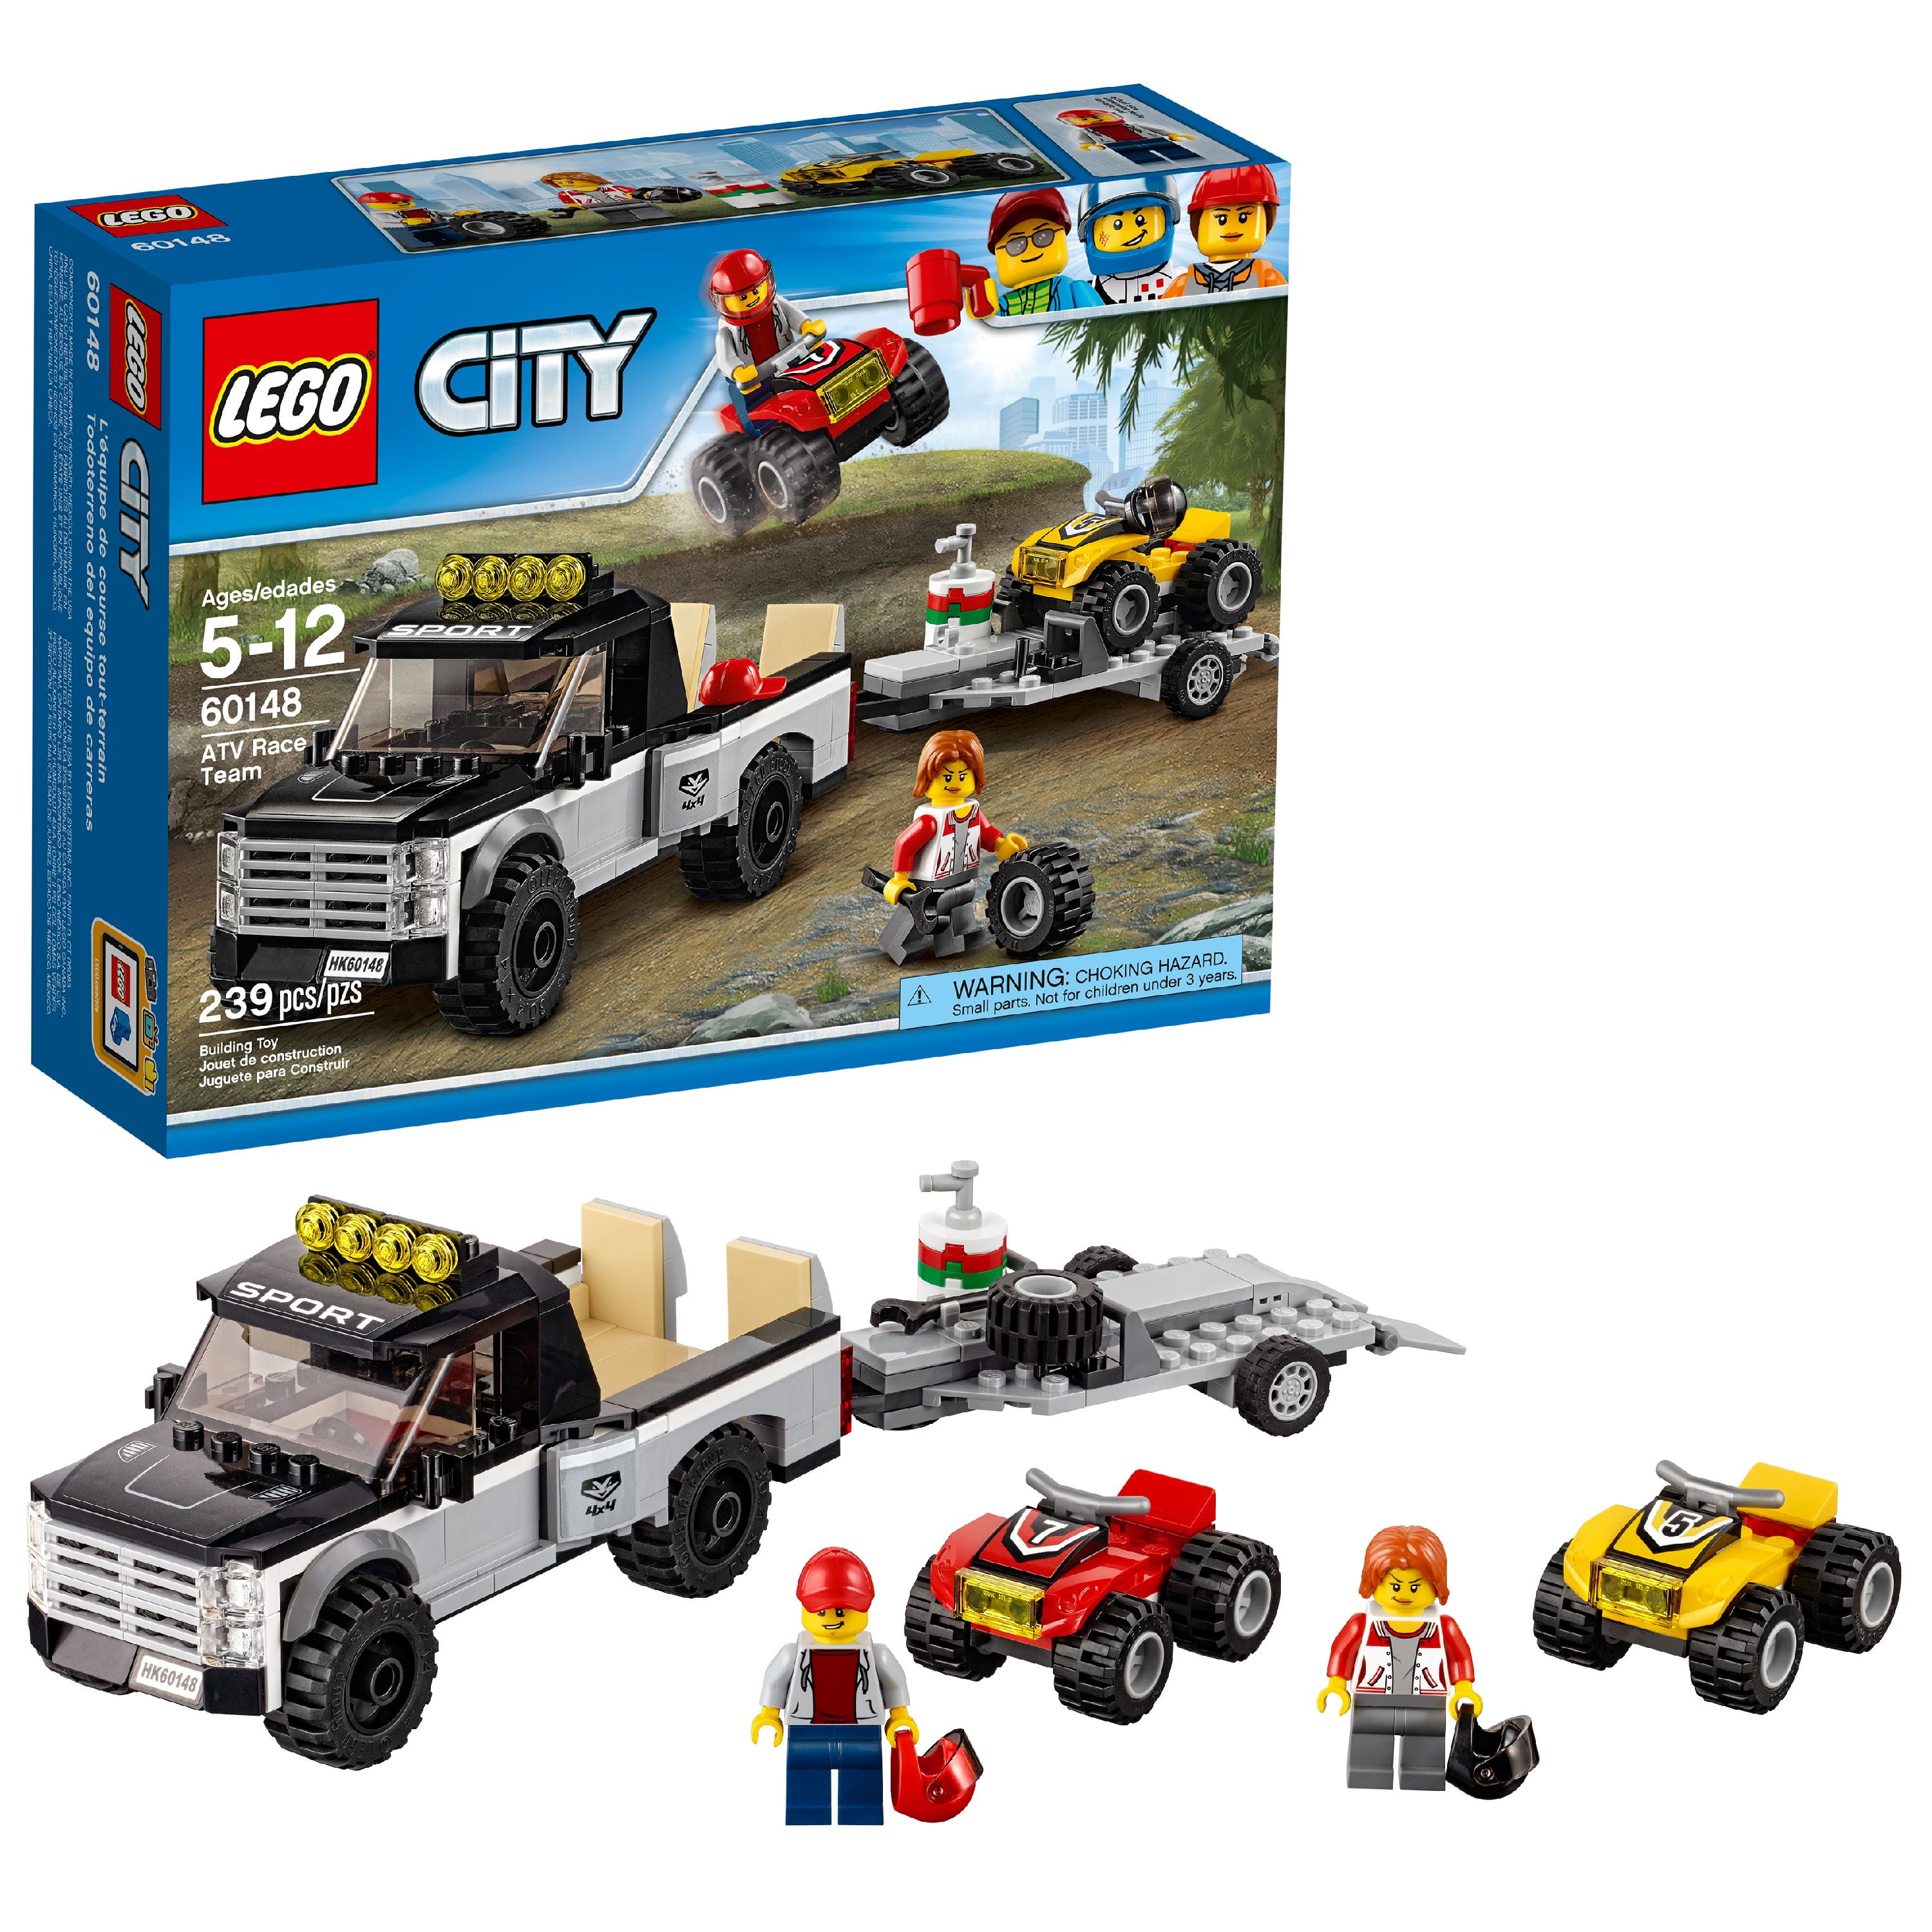 LEGO City ATV Race Team 60148 Building Kit with Toy Truck (239 Pcs)